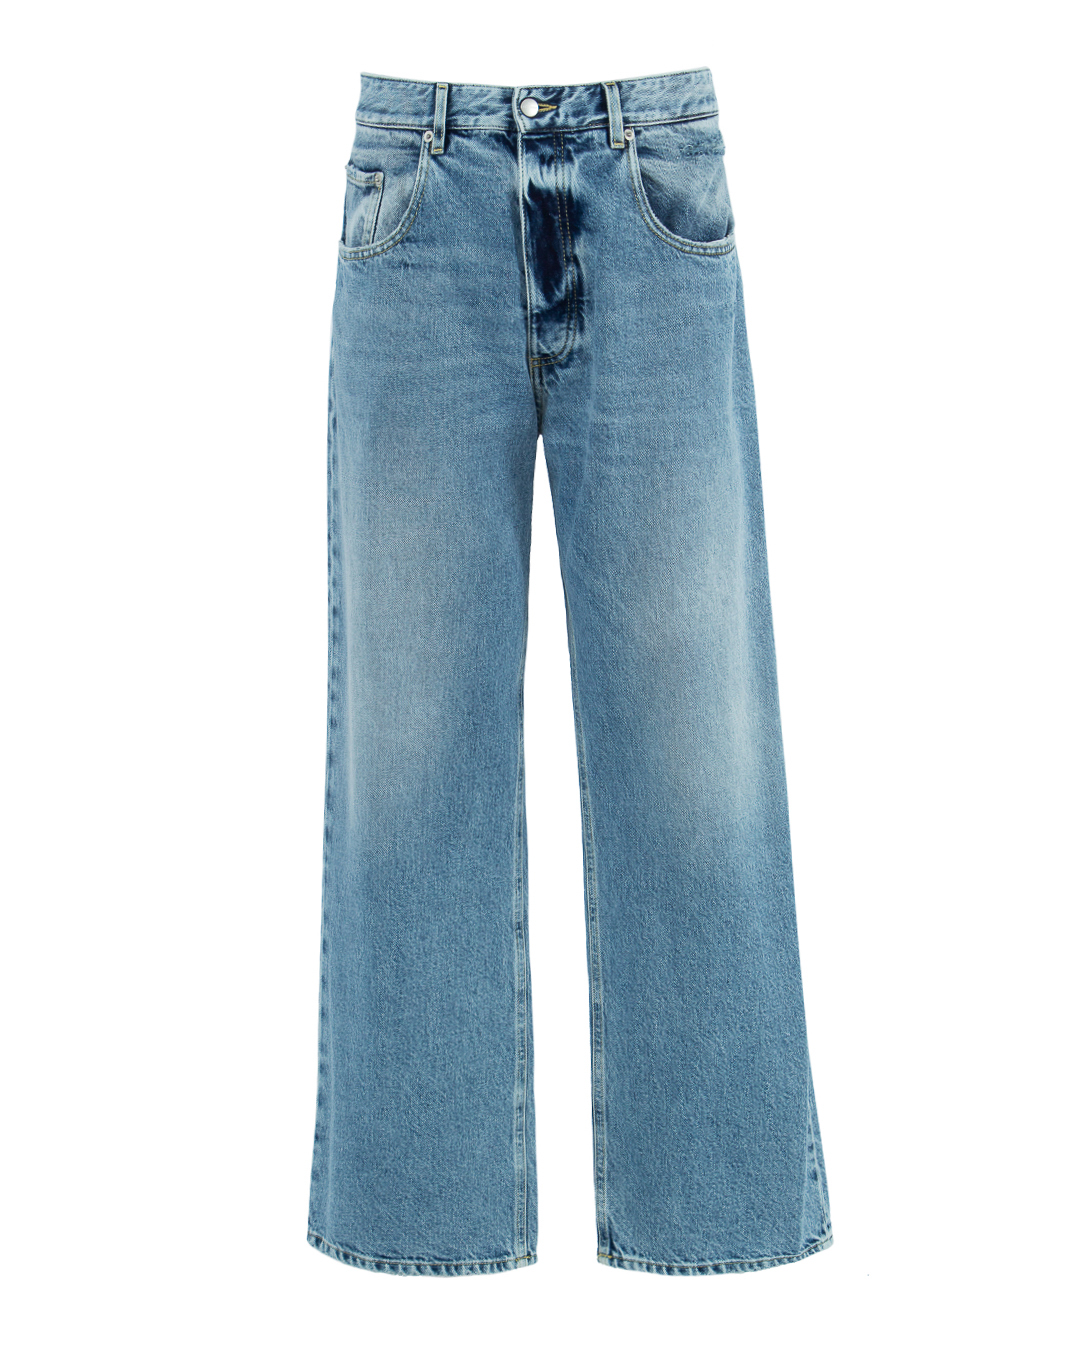 джинсы ICON DENIM WILLID754 синий 36, размер 36 - фото 1